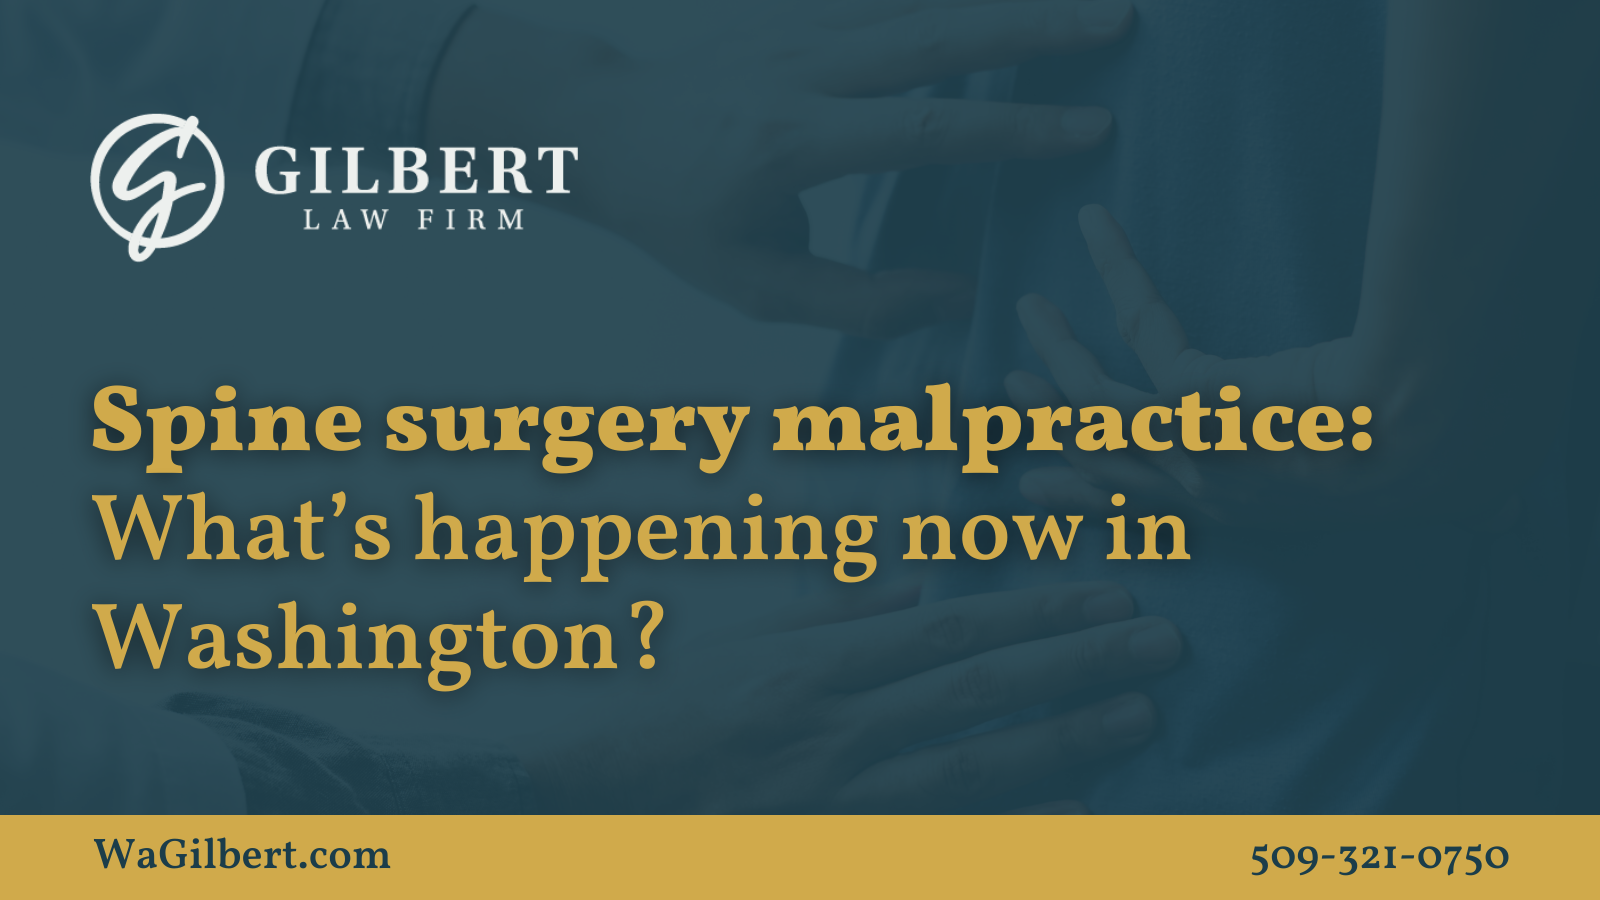 Spine surgery malpractice in Washington | Gilbert Law Firm Spokane Washington